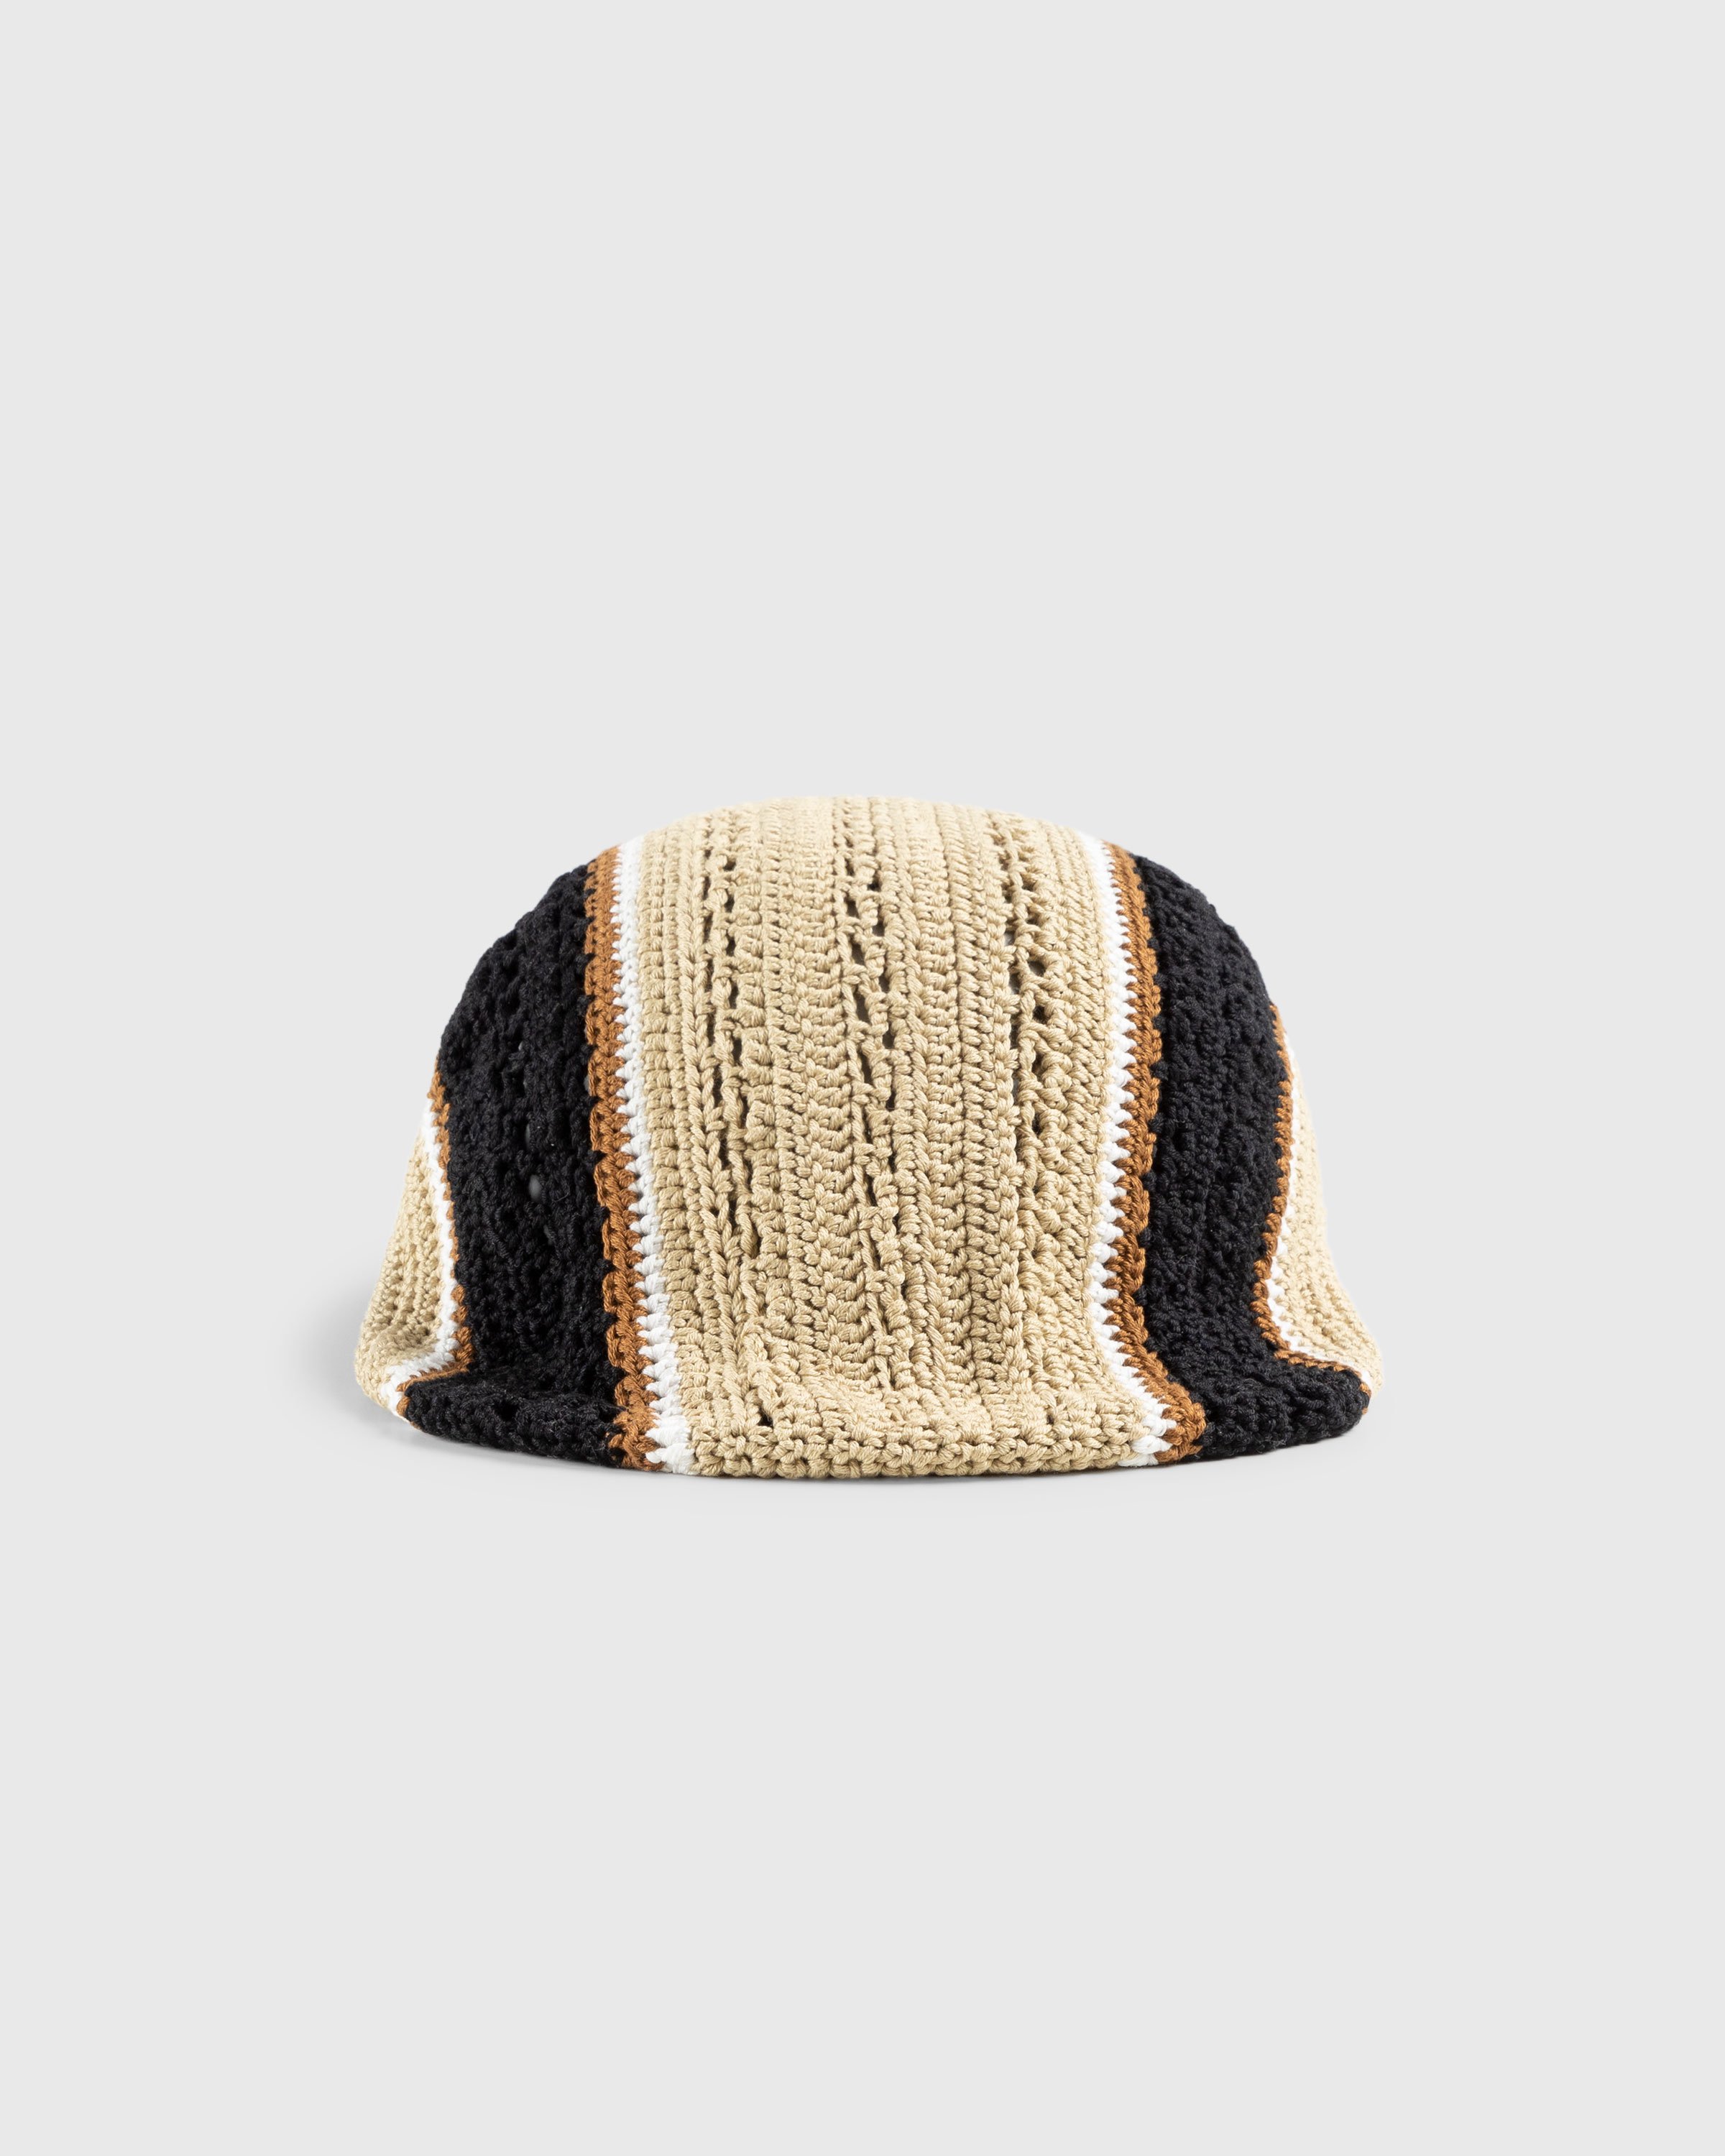 SSU - Crochet Flat Hat Beige/Black - Accessories - Black - Image 2